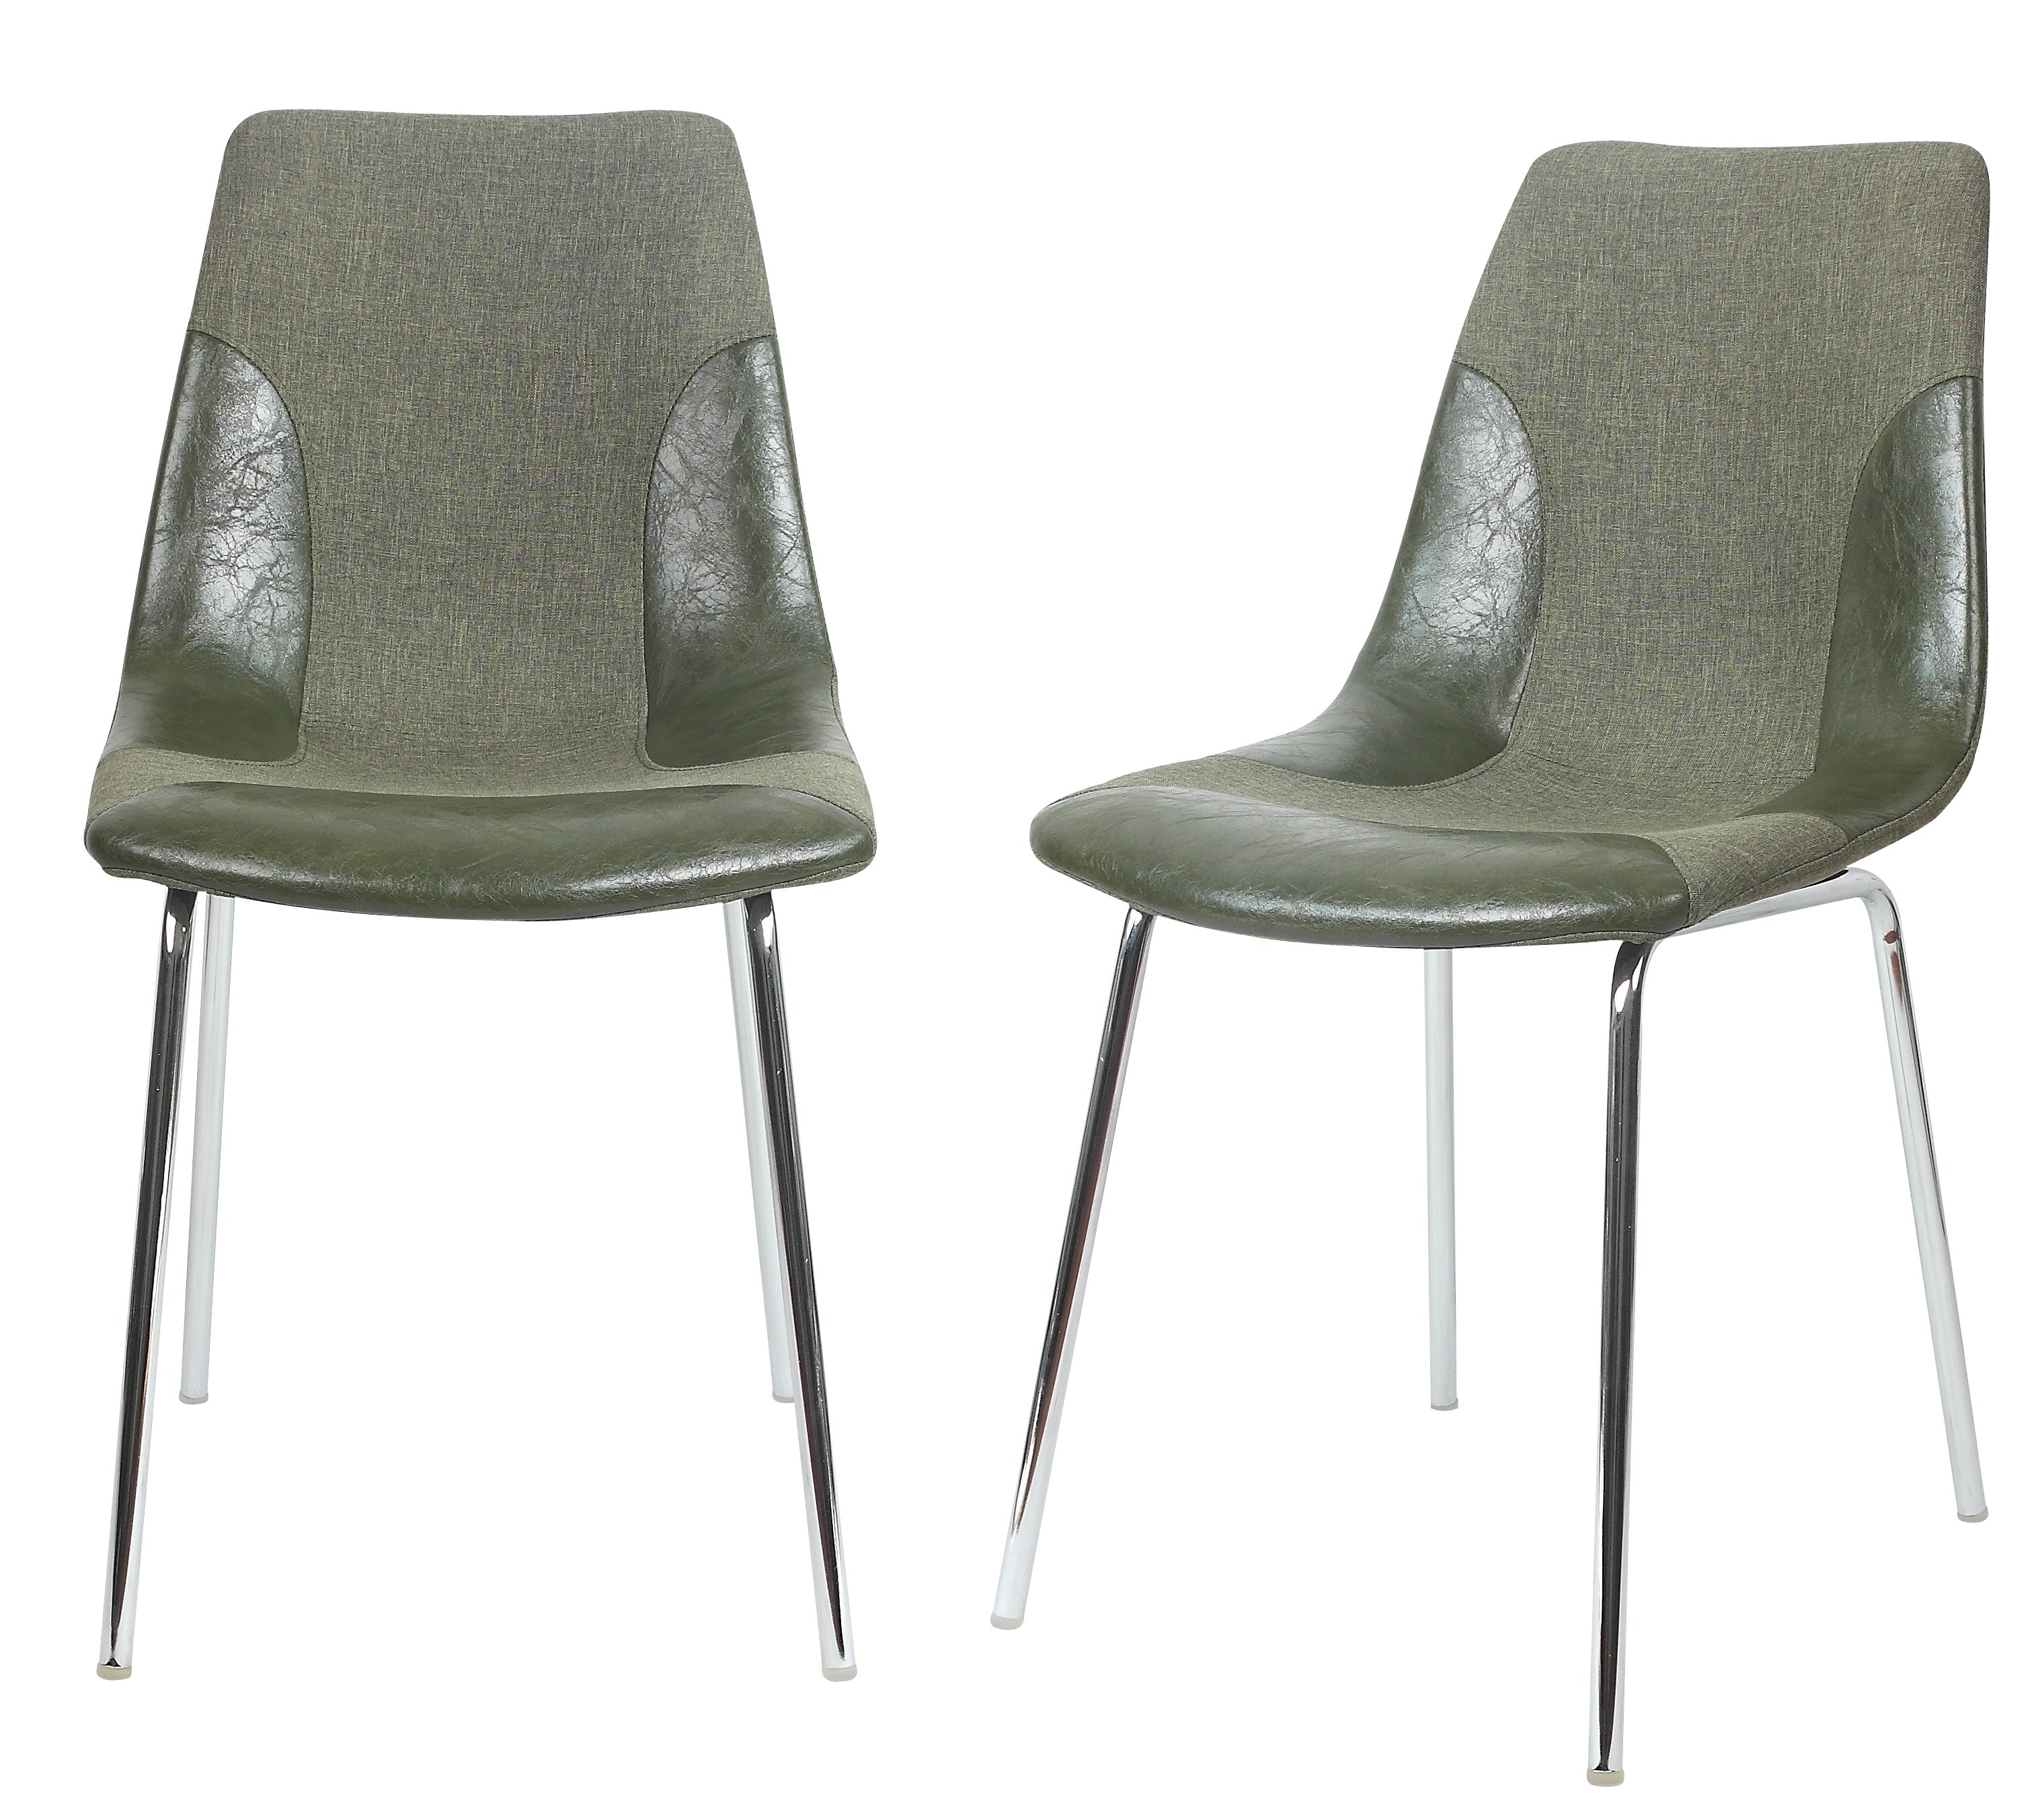 ViscoLogic LUXUS Dining Chairs (2, Denim Green)